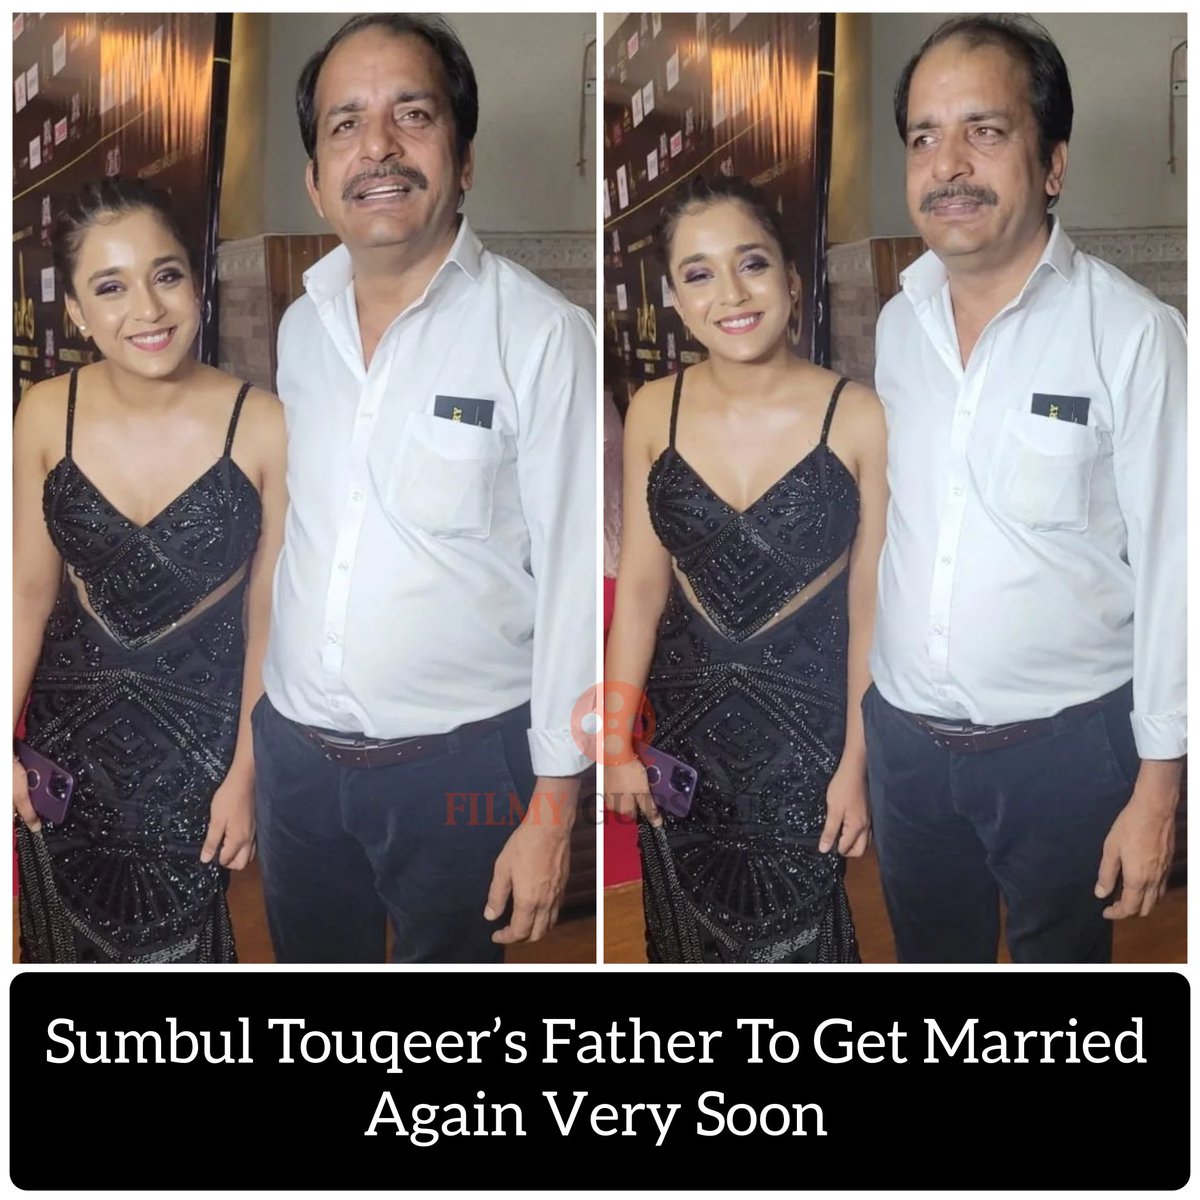 Sumbul Touqeer’s father Touqeer Hasan Khan to get married again soon.

#SumbulTouqeer #SumbulTouqeerKhan #TouqeerHasanKhan #Filmygupshup